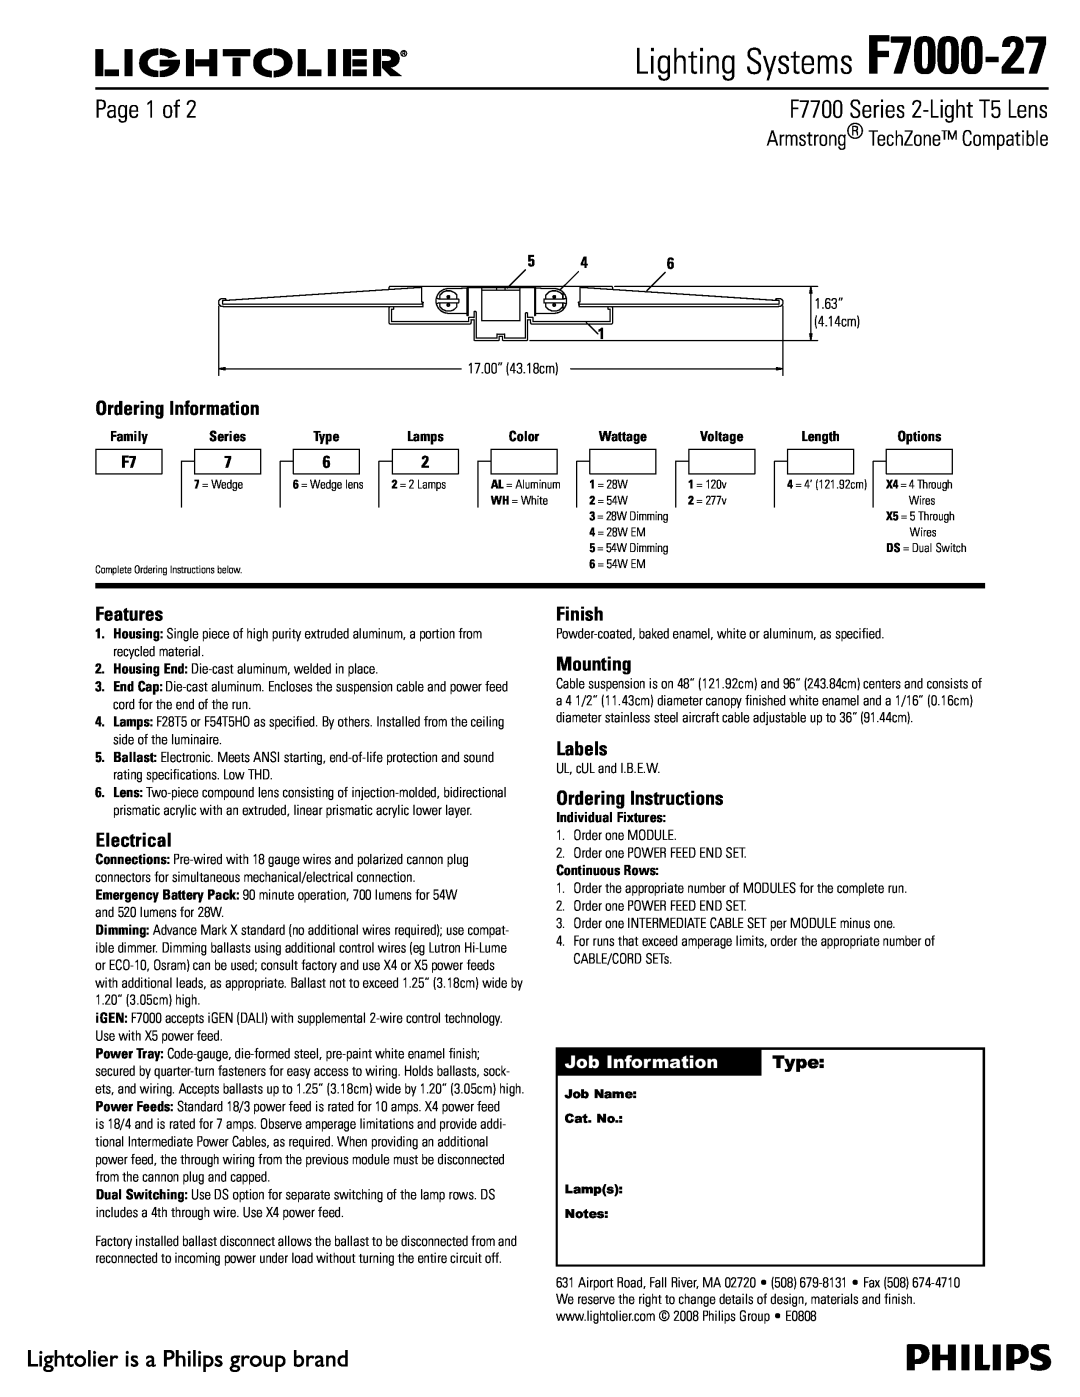 Lightolier specifications 4FSJFT-JHIU5-FOT, Job Information, Type, Lighting Systems F7000-27, Features 